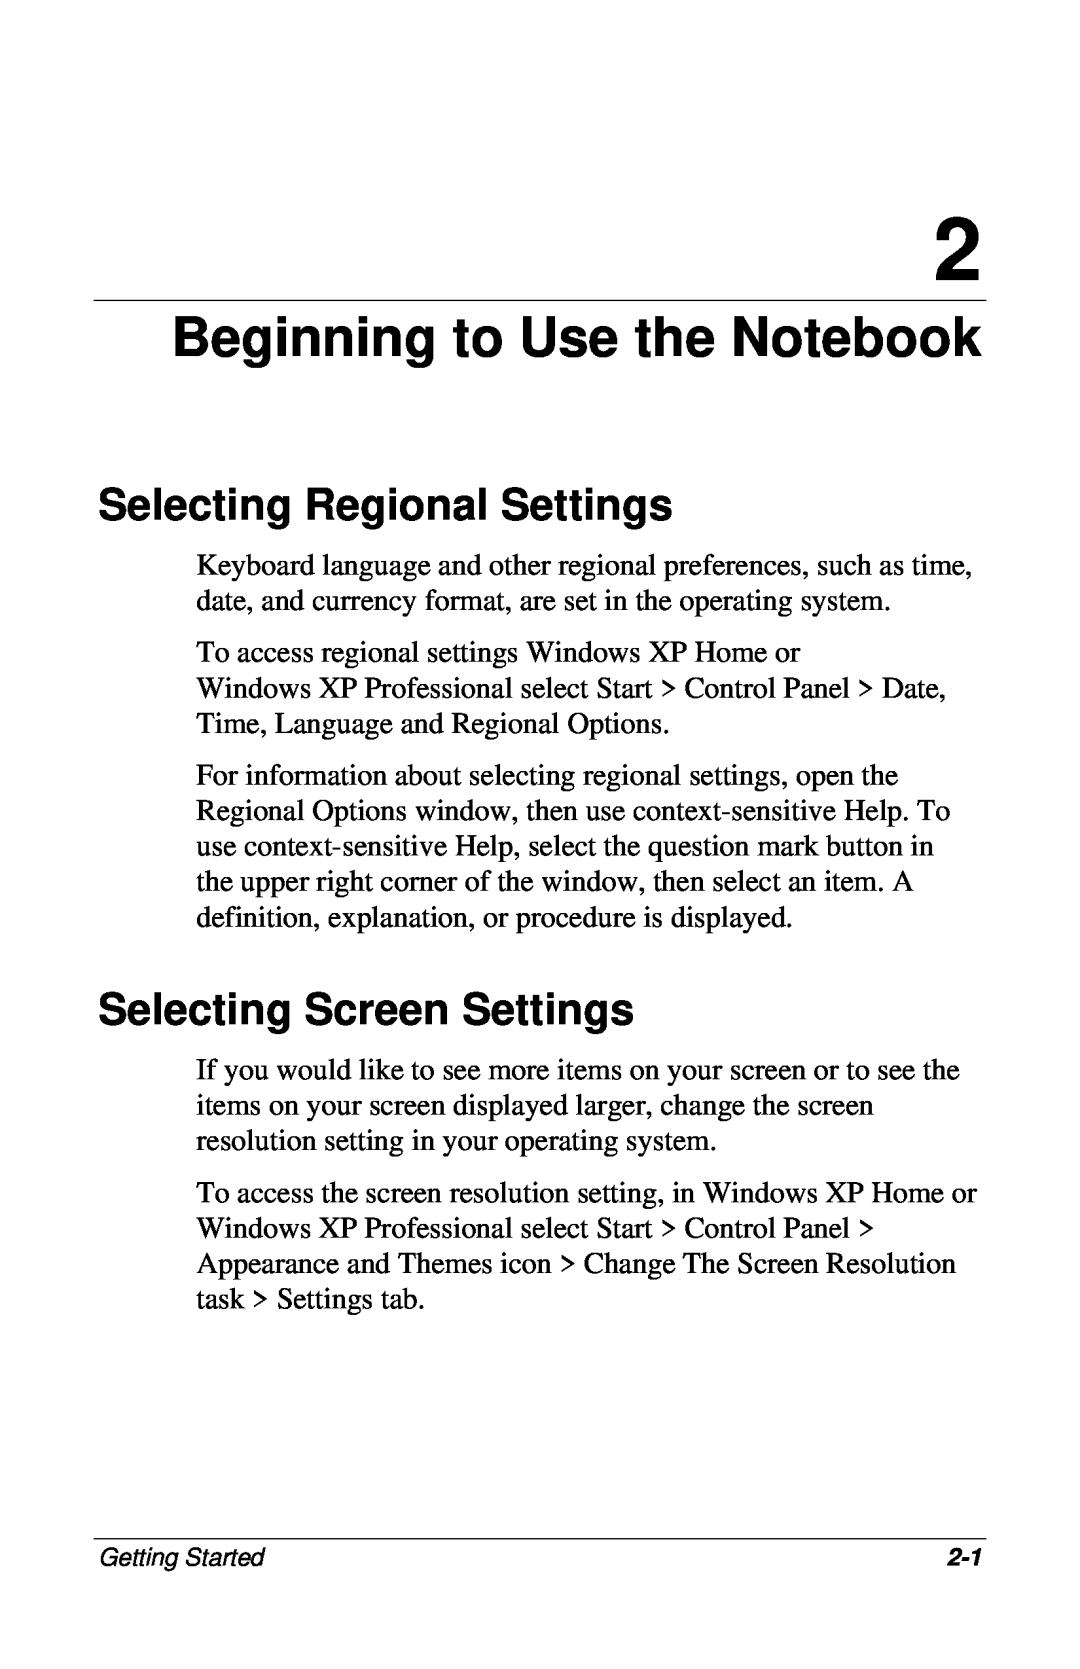 HP 905AP, 955AP, 950AP, 943AP, 945AP Beginning to Use the Notebook, Selecting Regional Settings, Selecting Screen Settings 